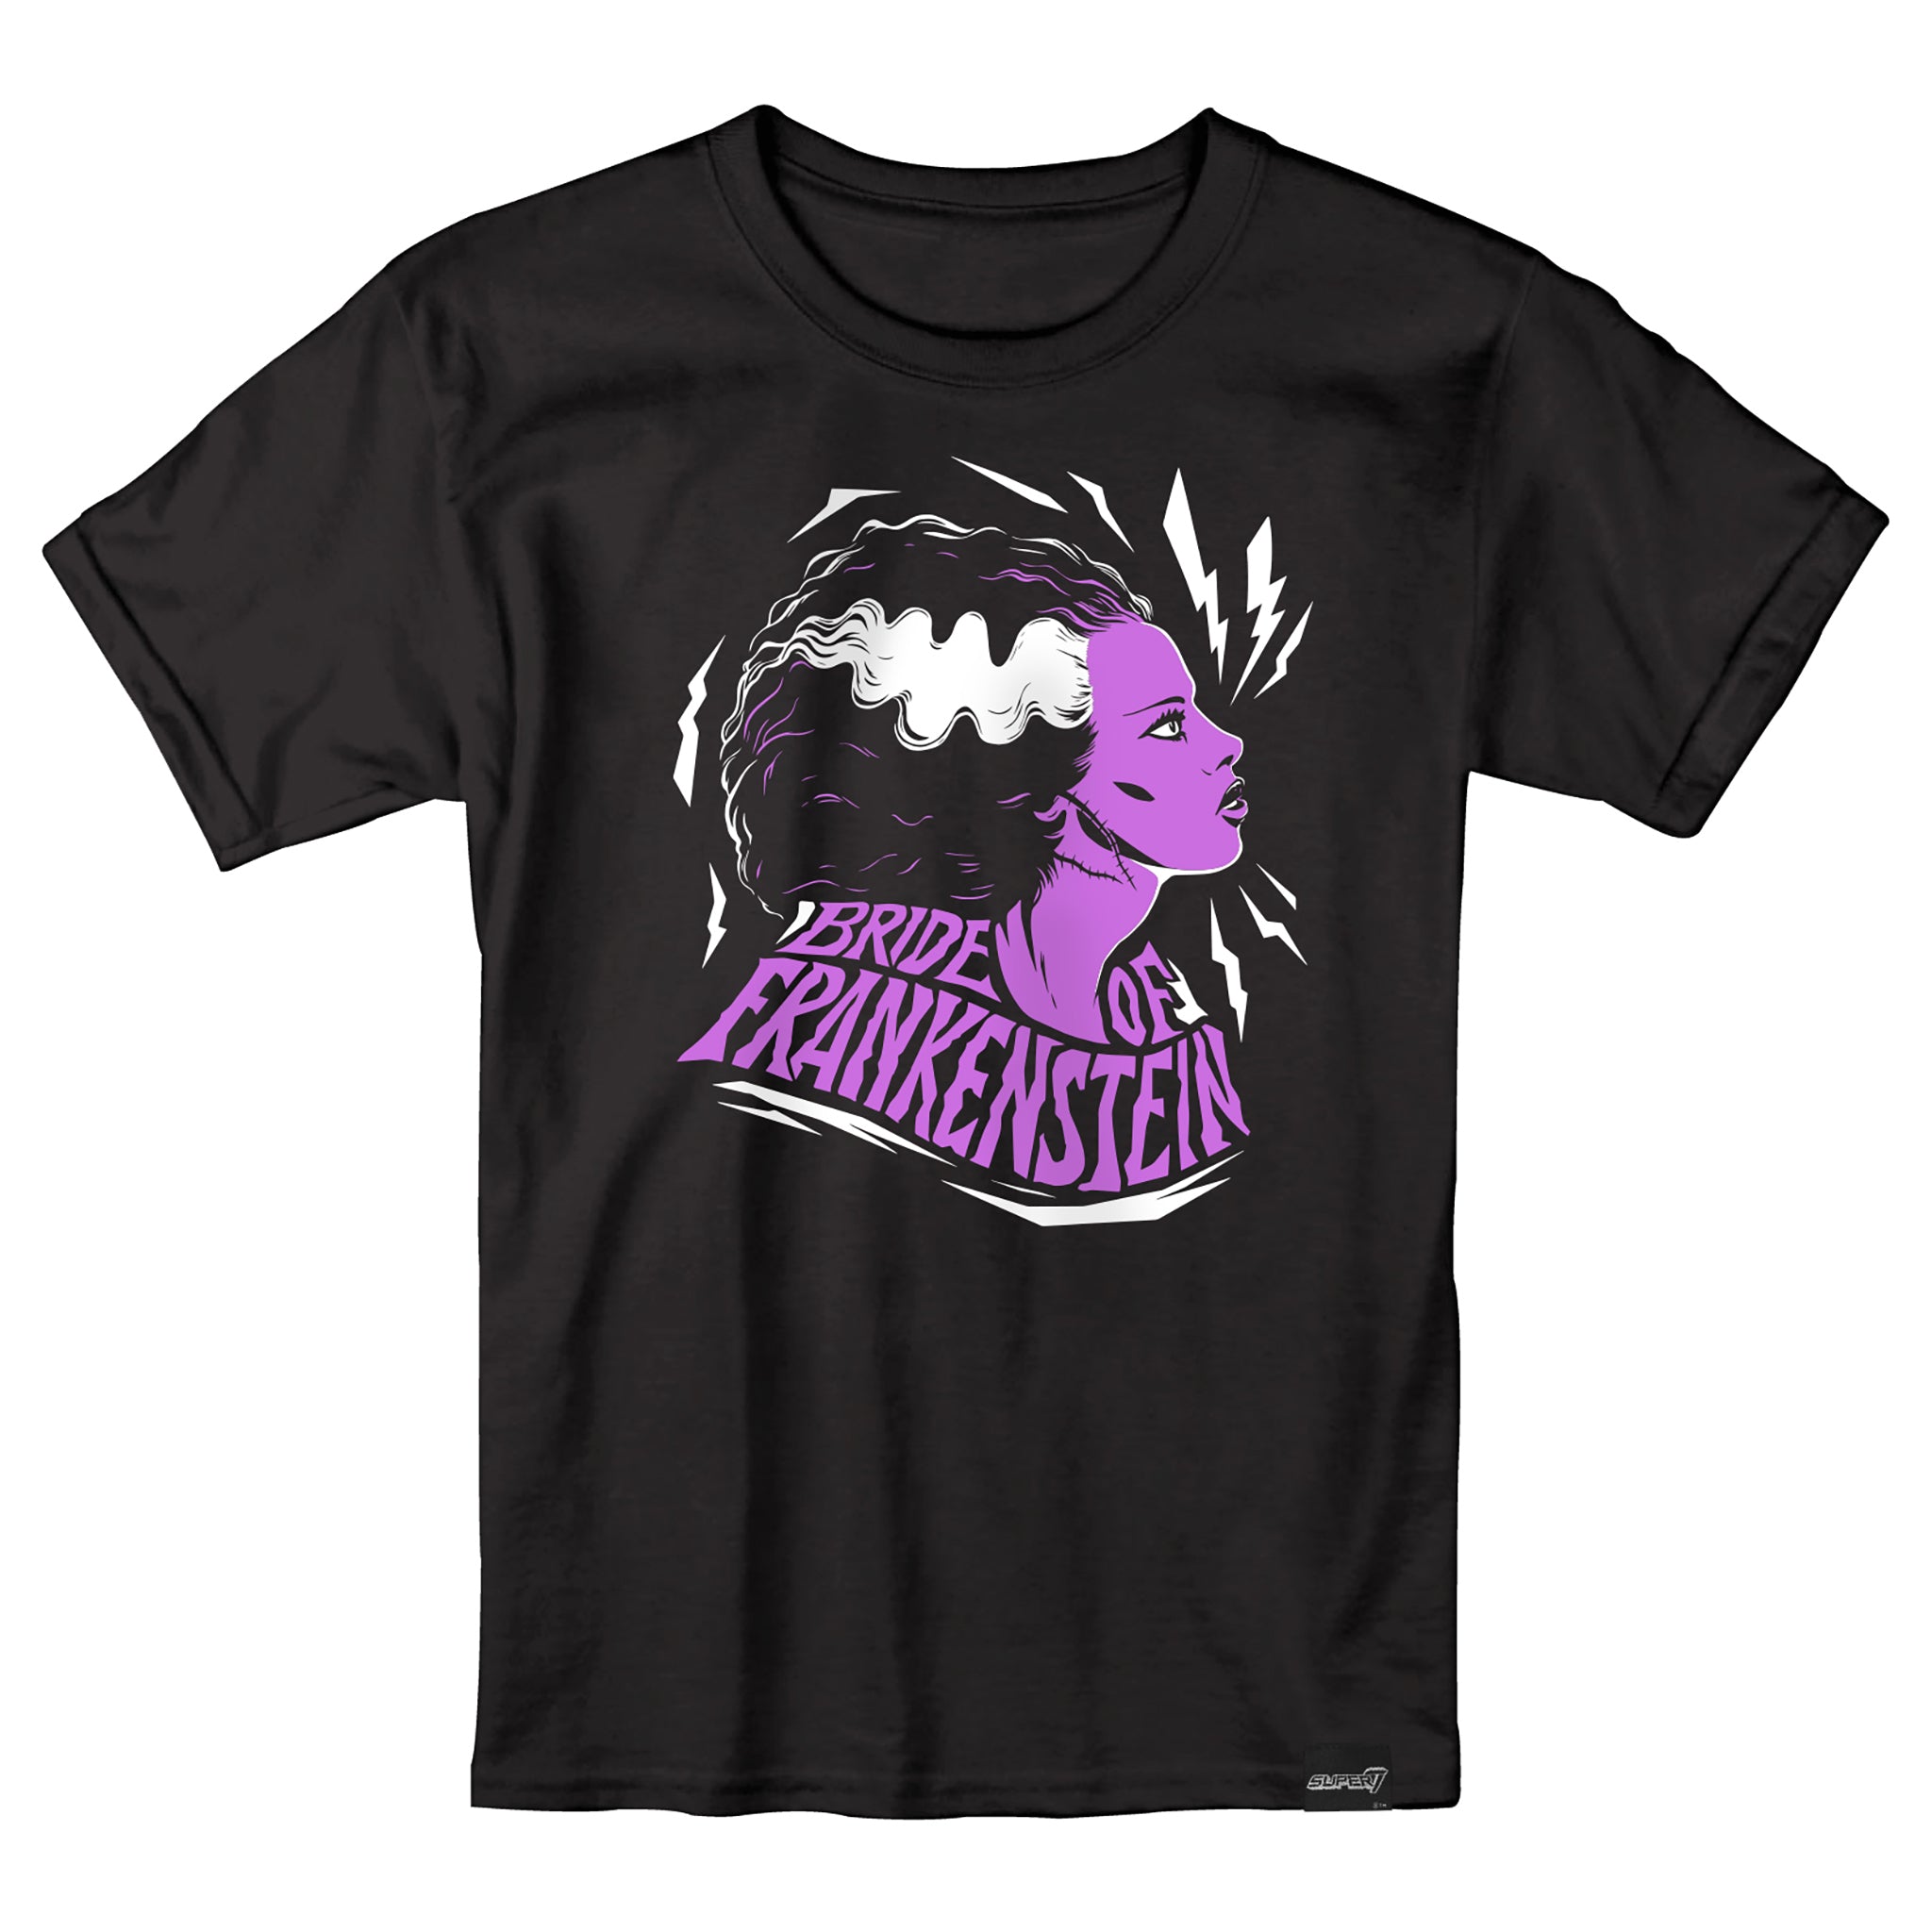 Universal Monsters T-Shirt - Bride of Frankenstein